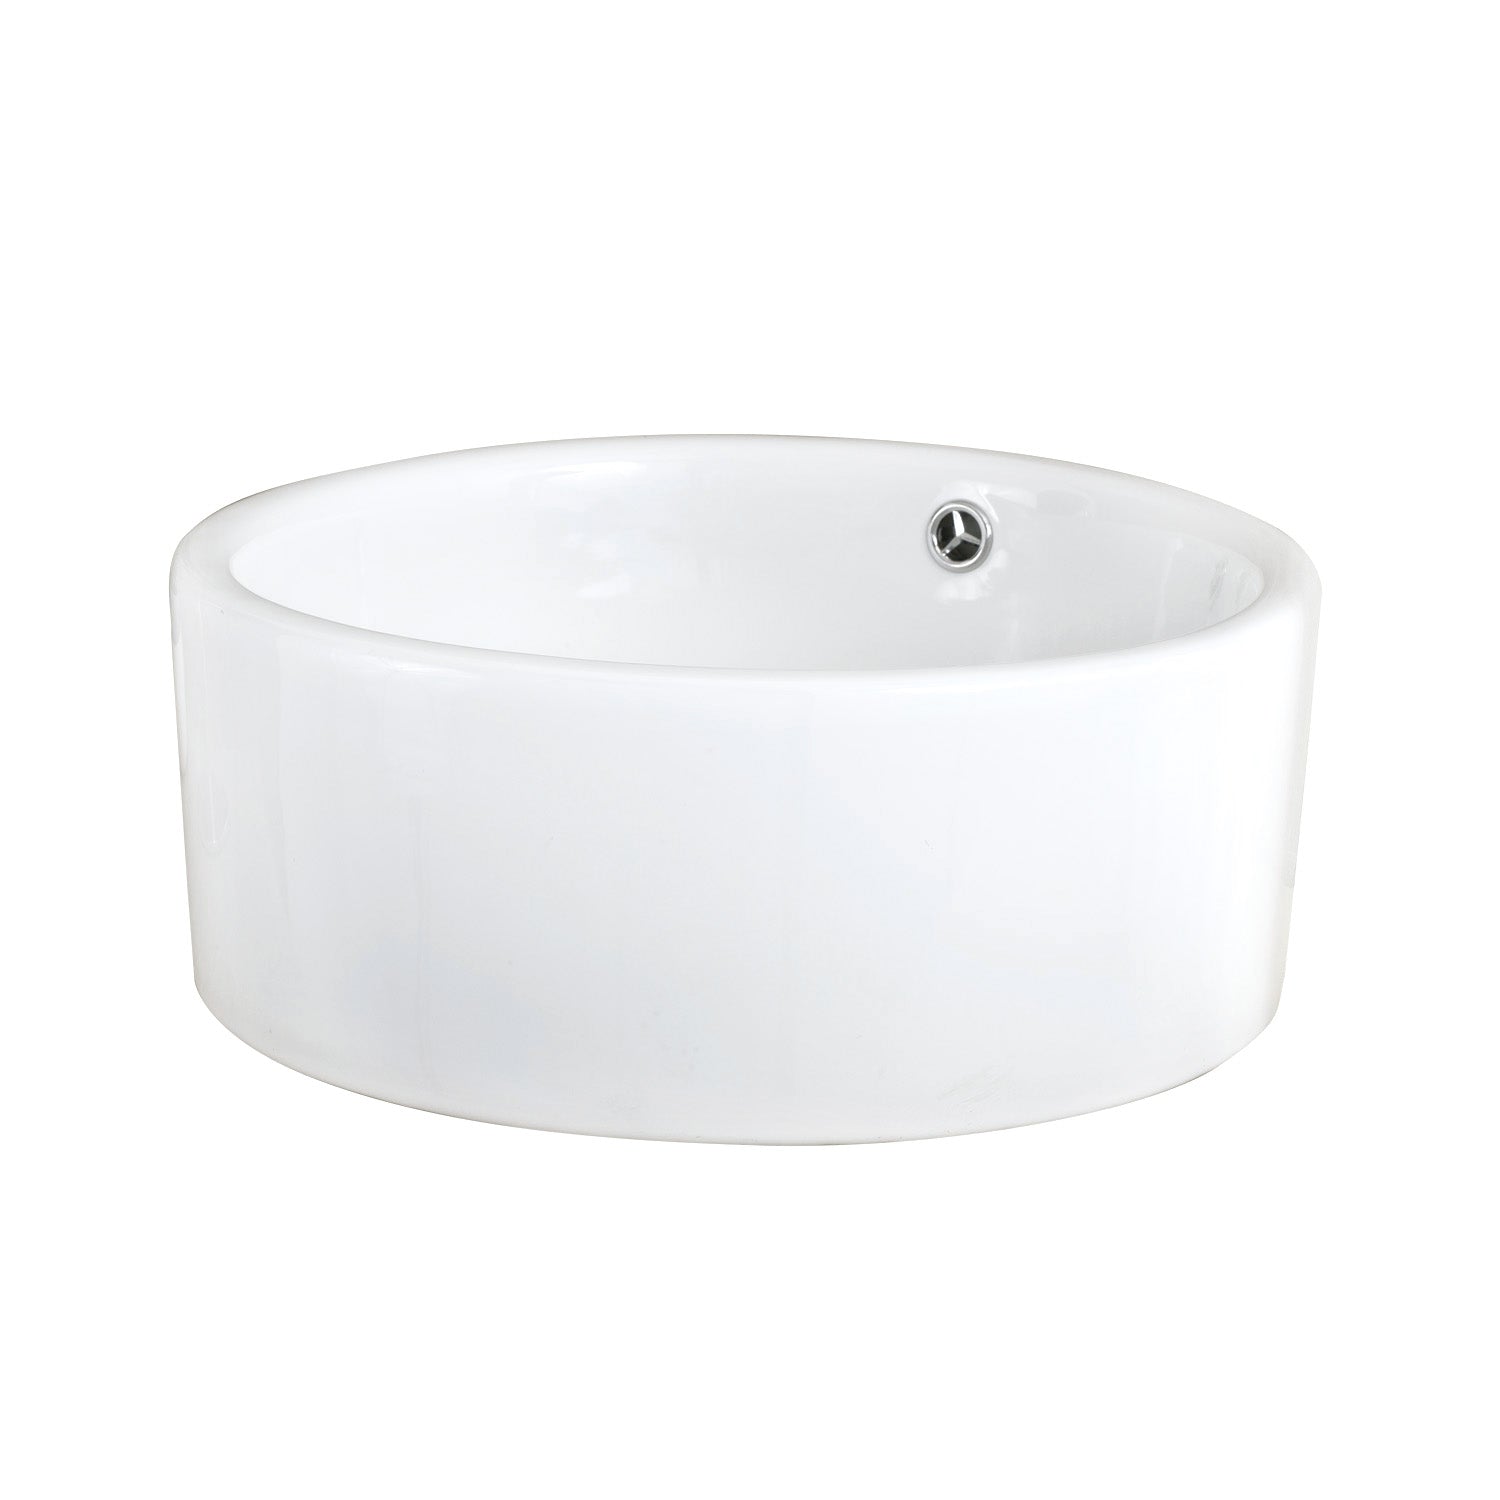 Lavabo redondo de cerámica para baño de un solo tazón DAX, acabado blanco, 16-1/2 x 4-1/2 pulgadas (BSN-218)